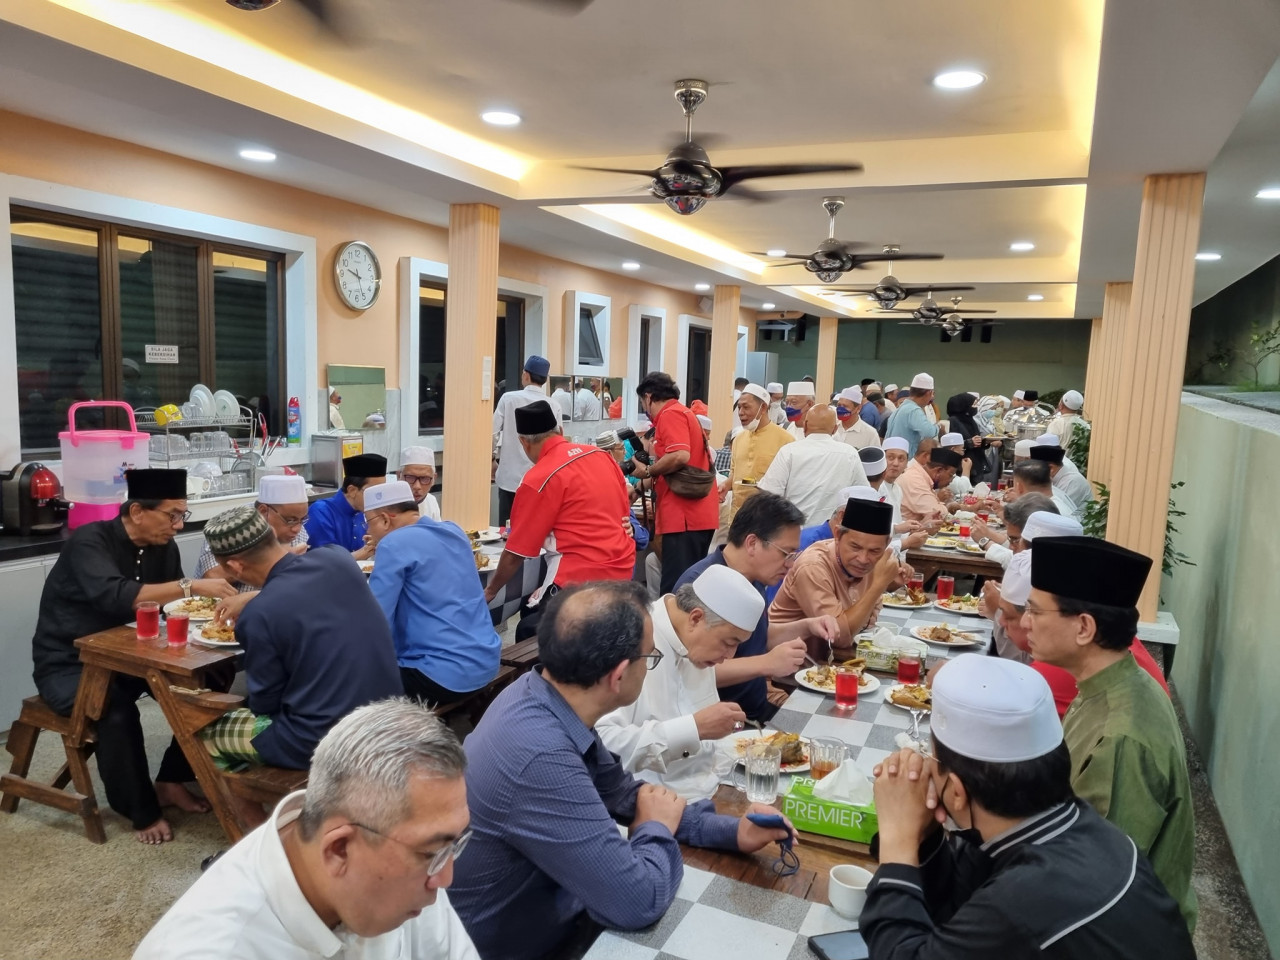 The source says that the reunion dinner was held to wish Datuk Seri Ahmad Zahid Hamidi good health. – Source pic, October 12, 2021